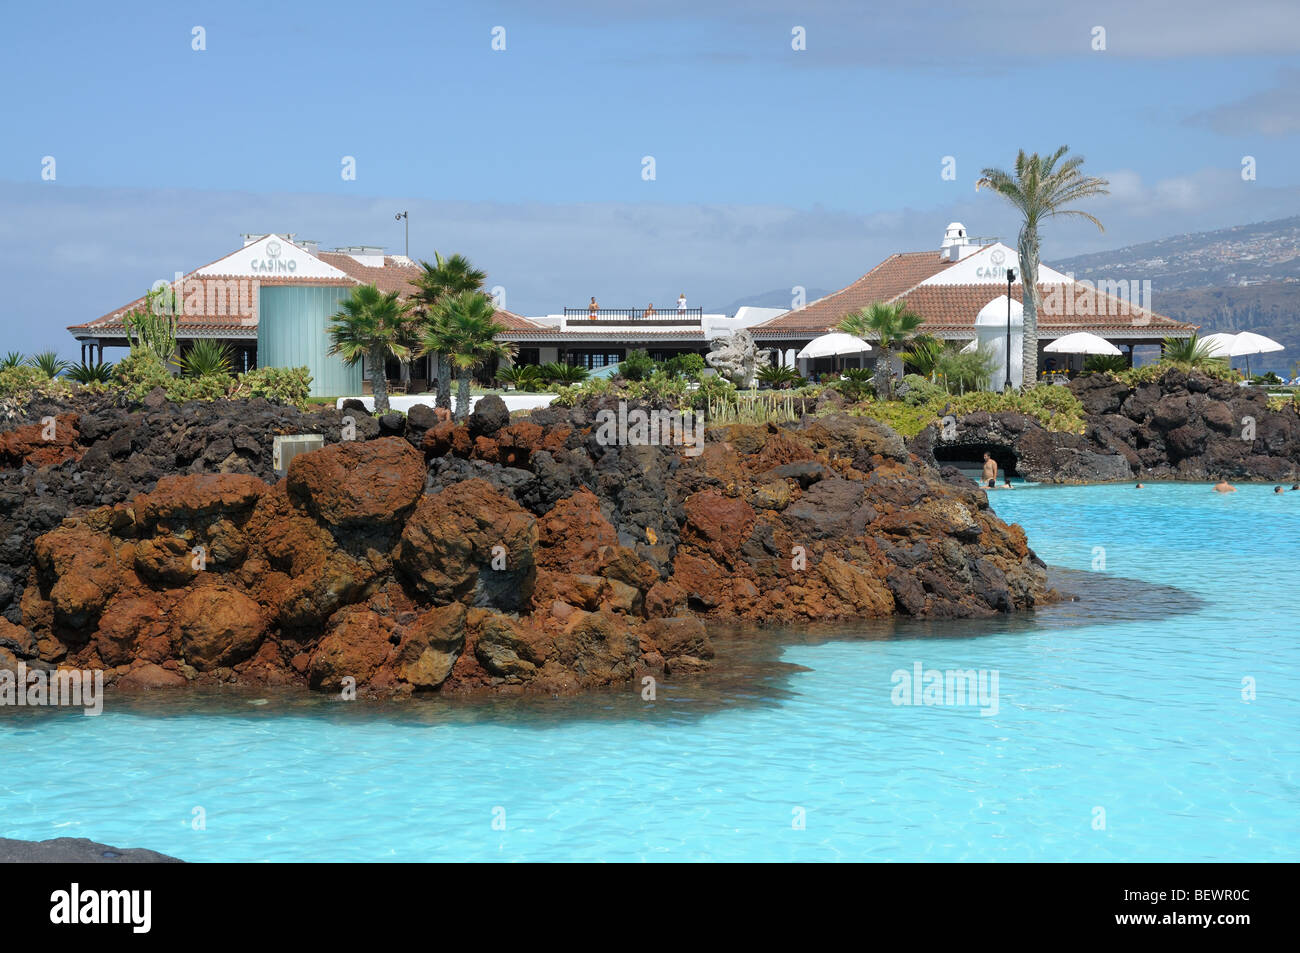 Casino puerto de la cruz hi-res stock photography and images - Alamy